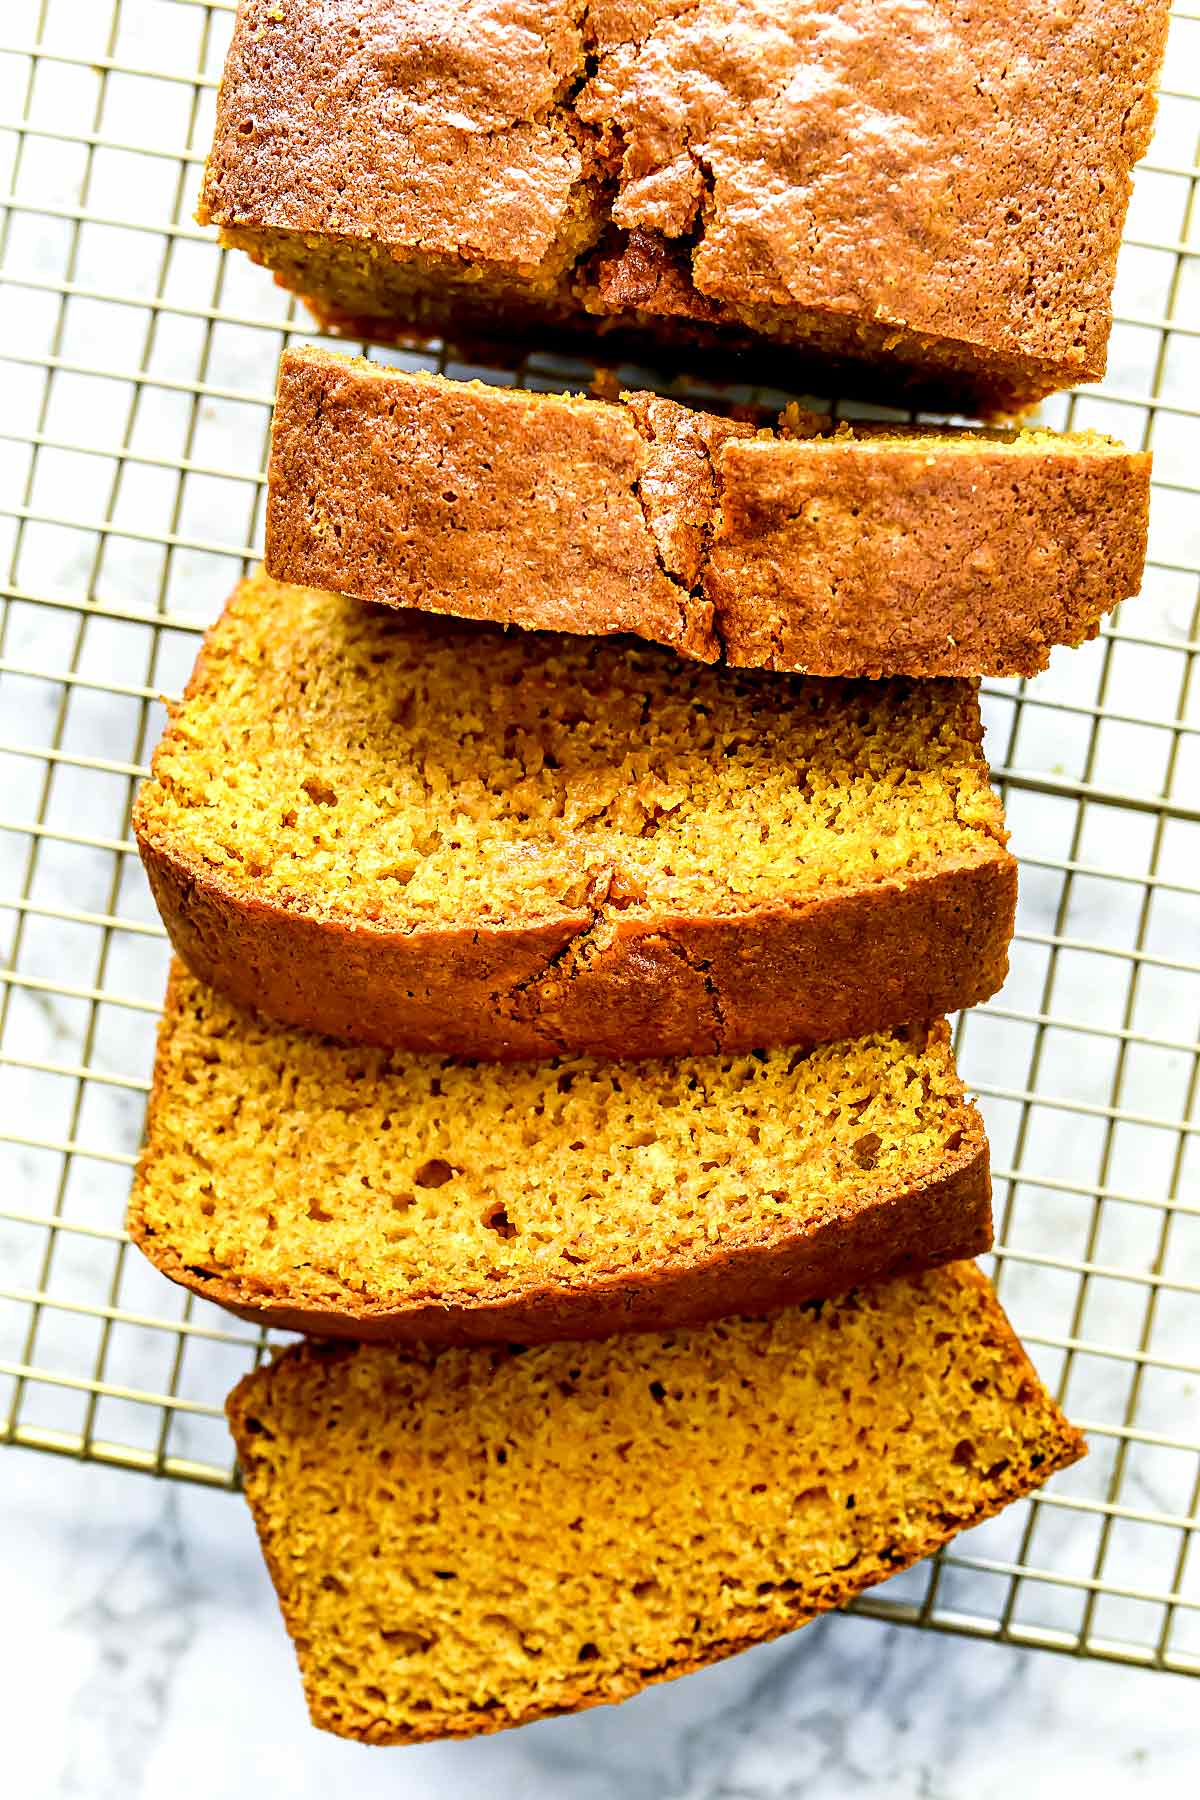 Homemade Bread Recipe - Tastes Better from Scratch